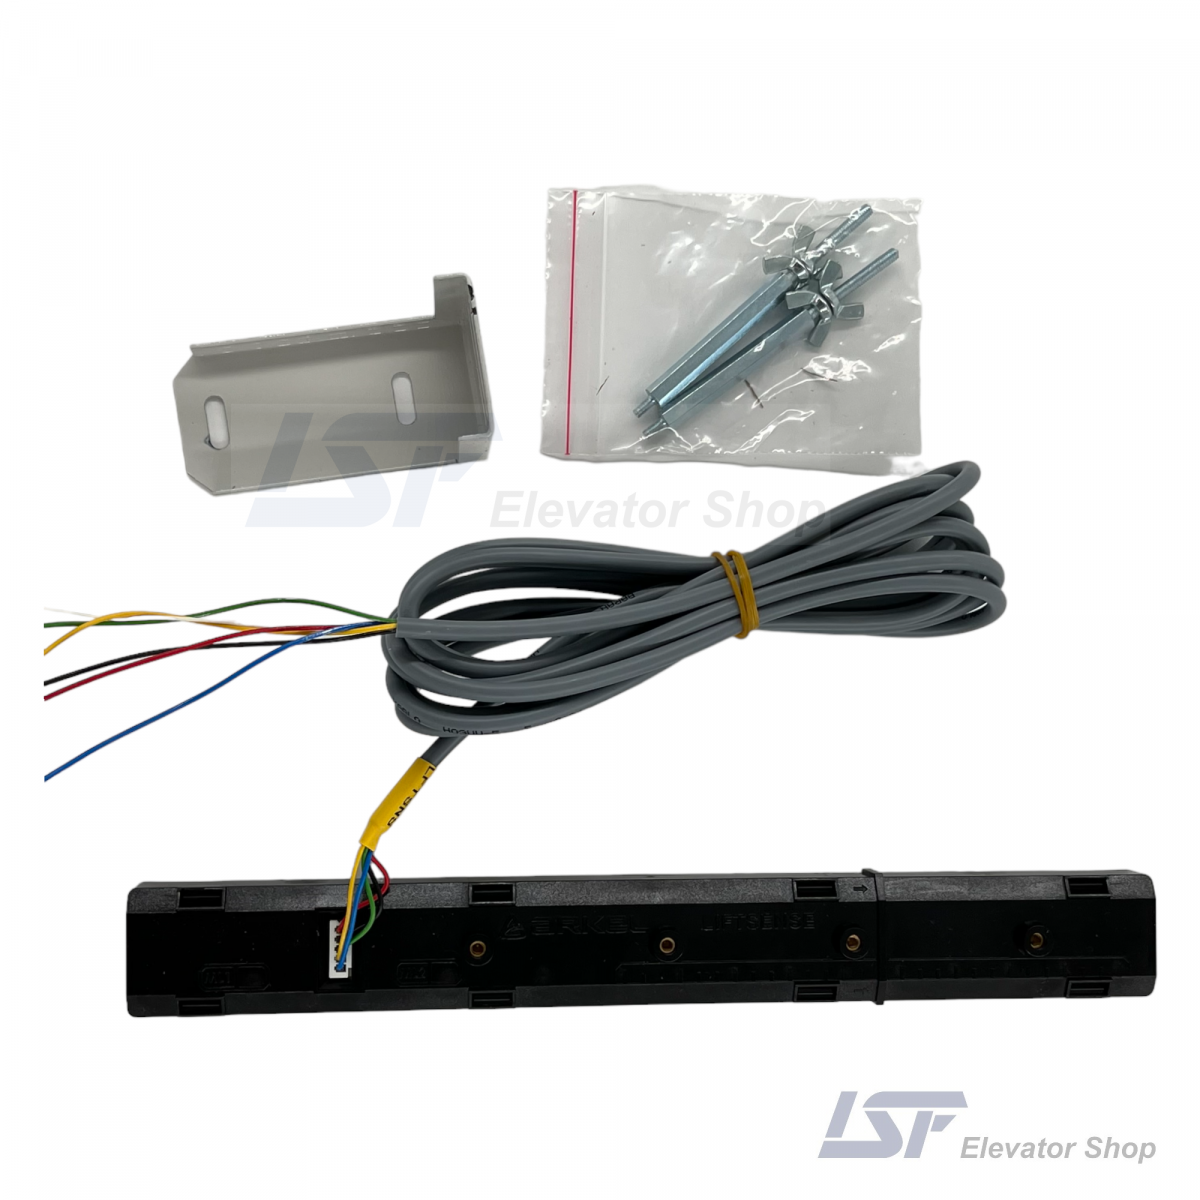 LIFTSENSE Arkel Positioning Sensor for Elevator (1)